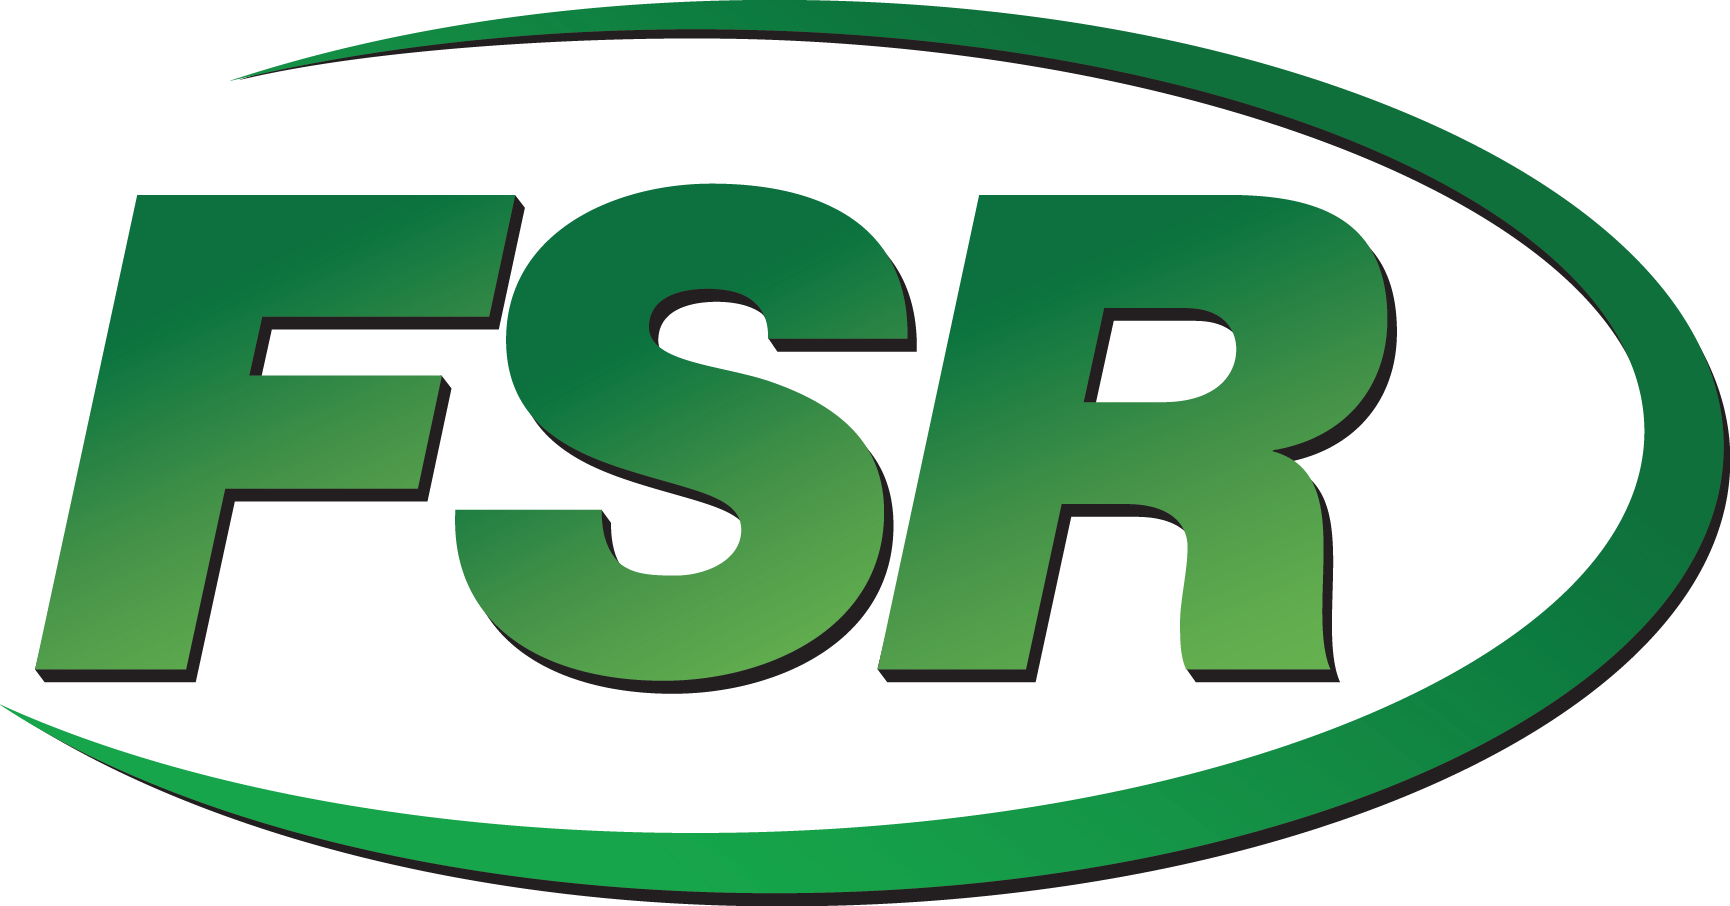 Fss. FSR logo. AMD FSR logo. FSR on лого. FSR12.5.